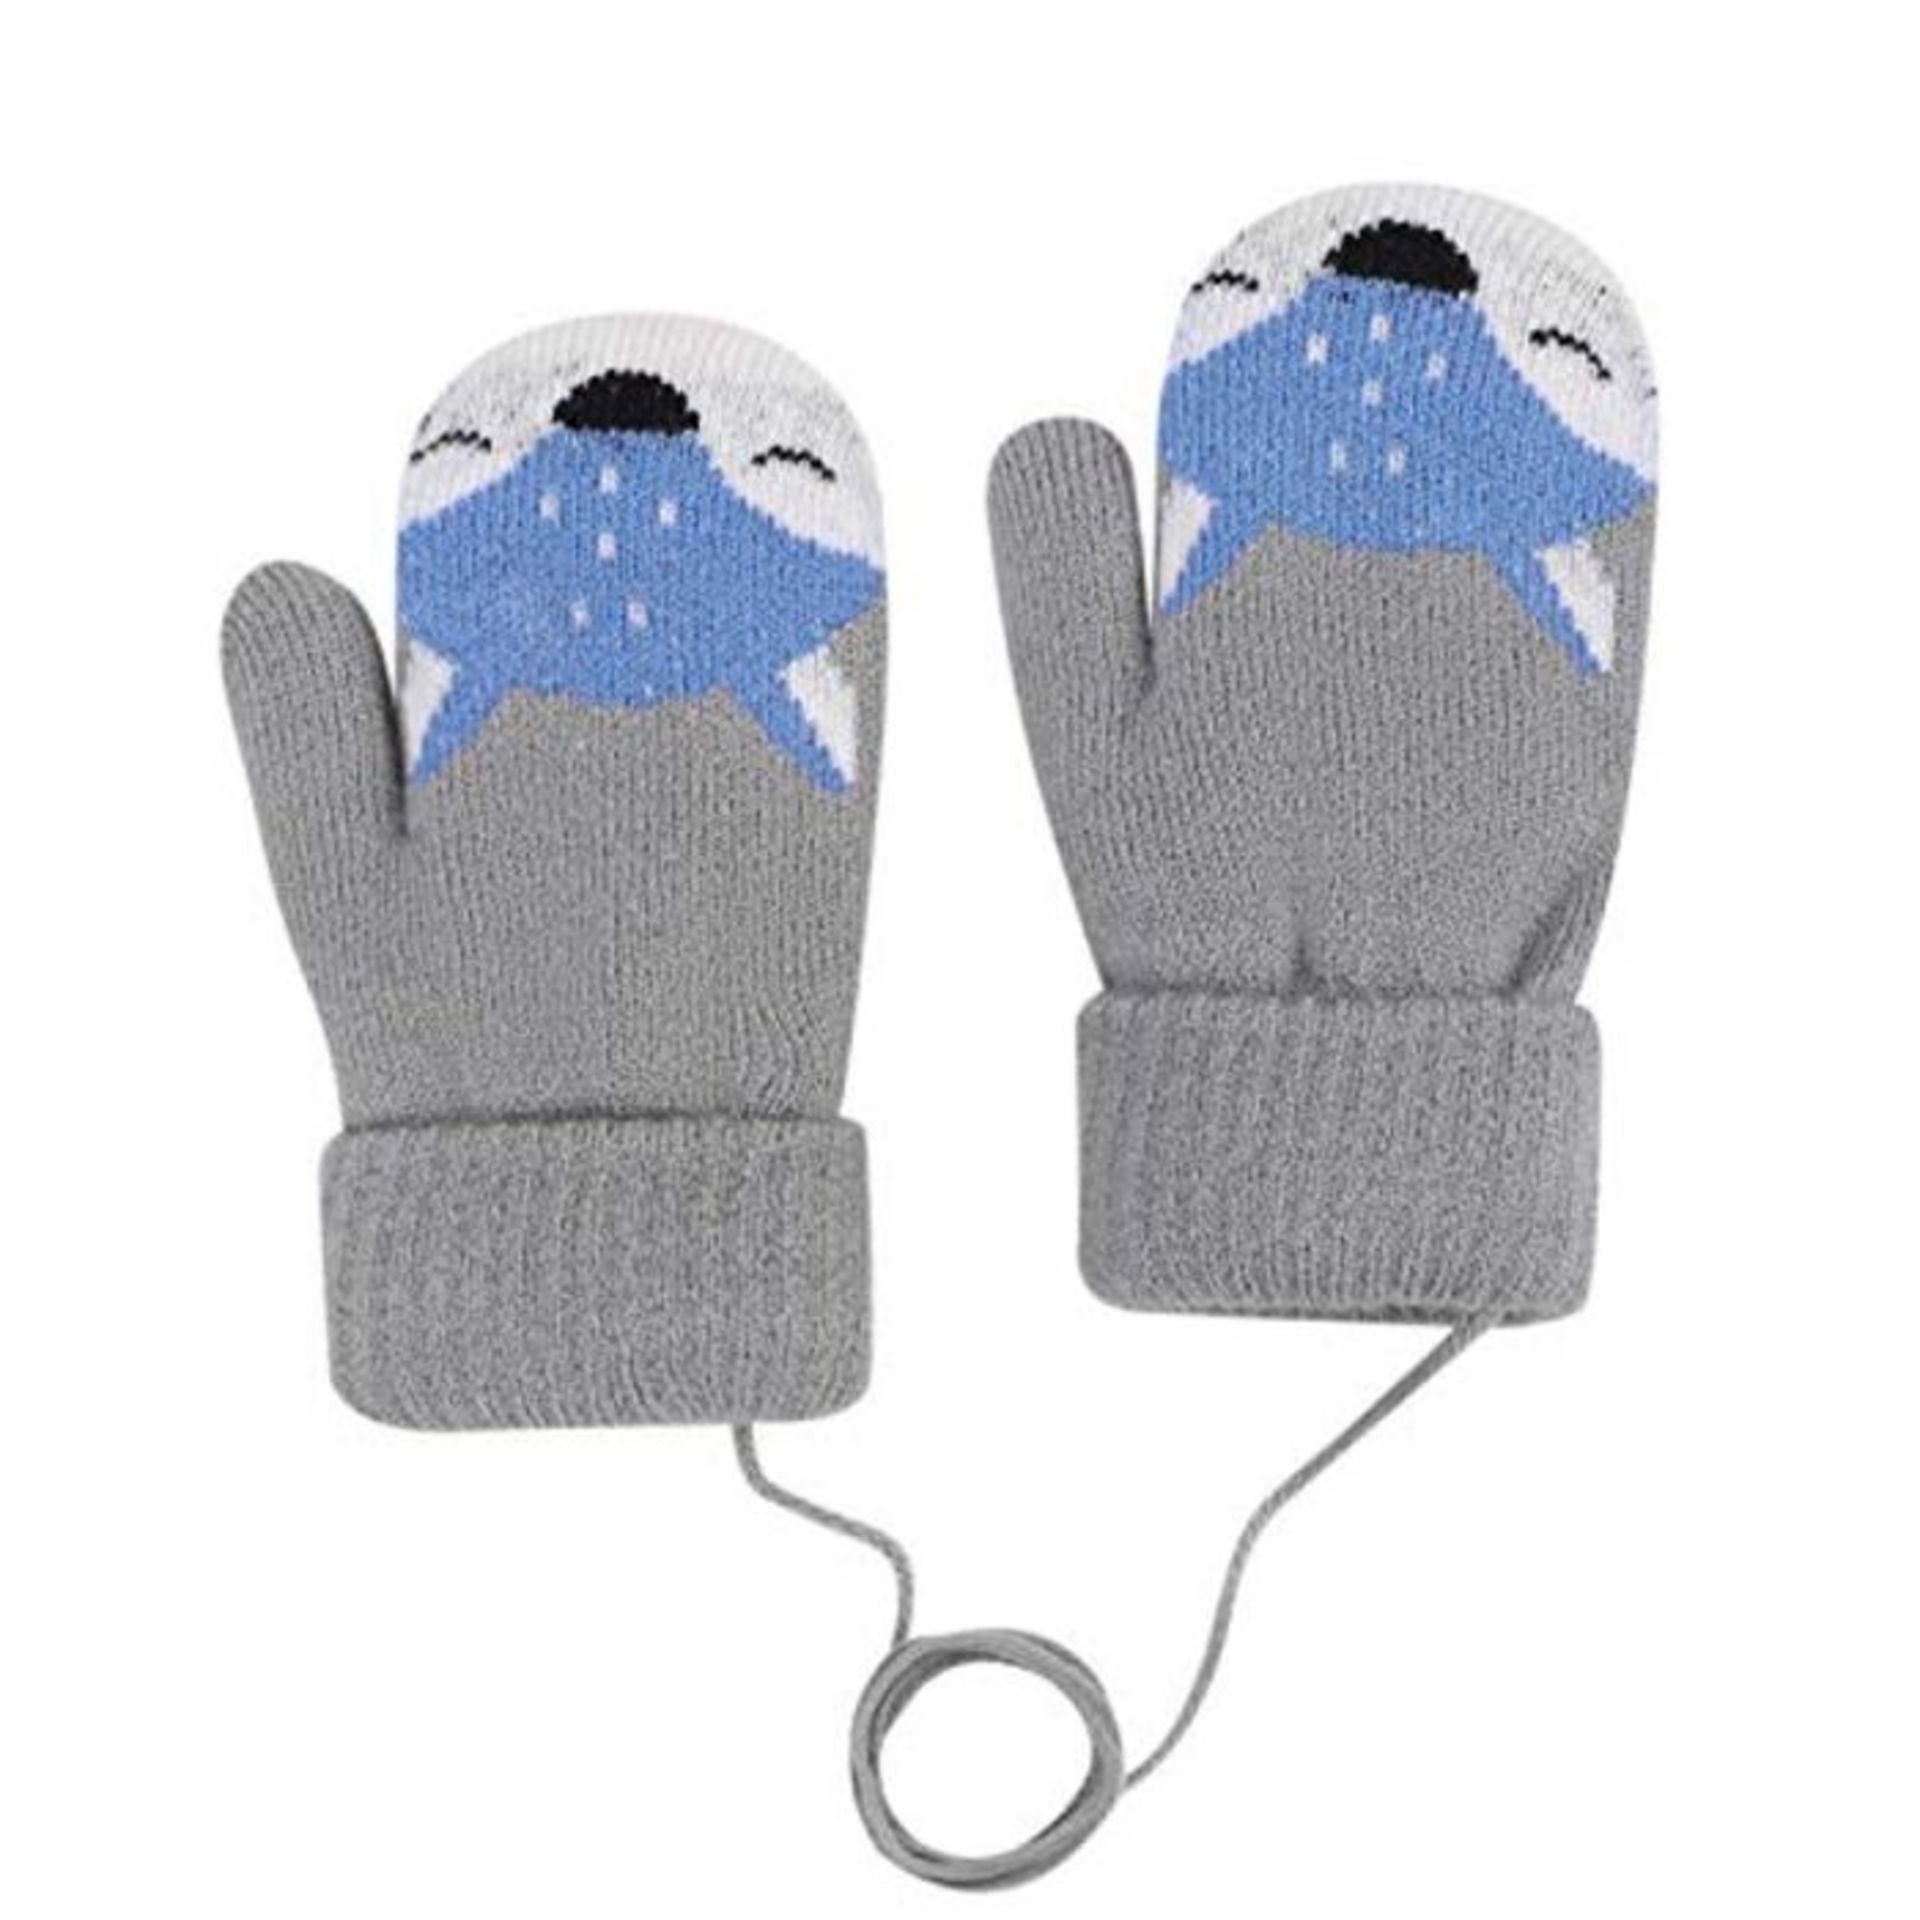 Winterhandschuhe Fuchs Muster Handschuhe Kleinkind Strickhandschuhe Baby Halshandschuh